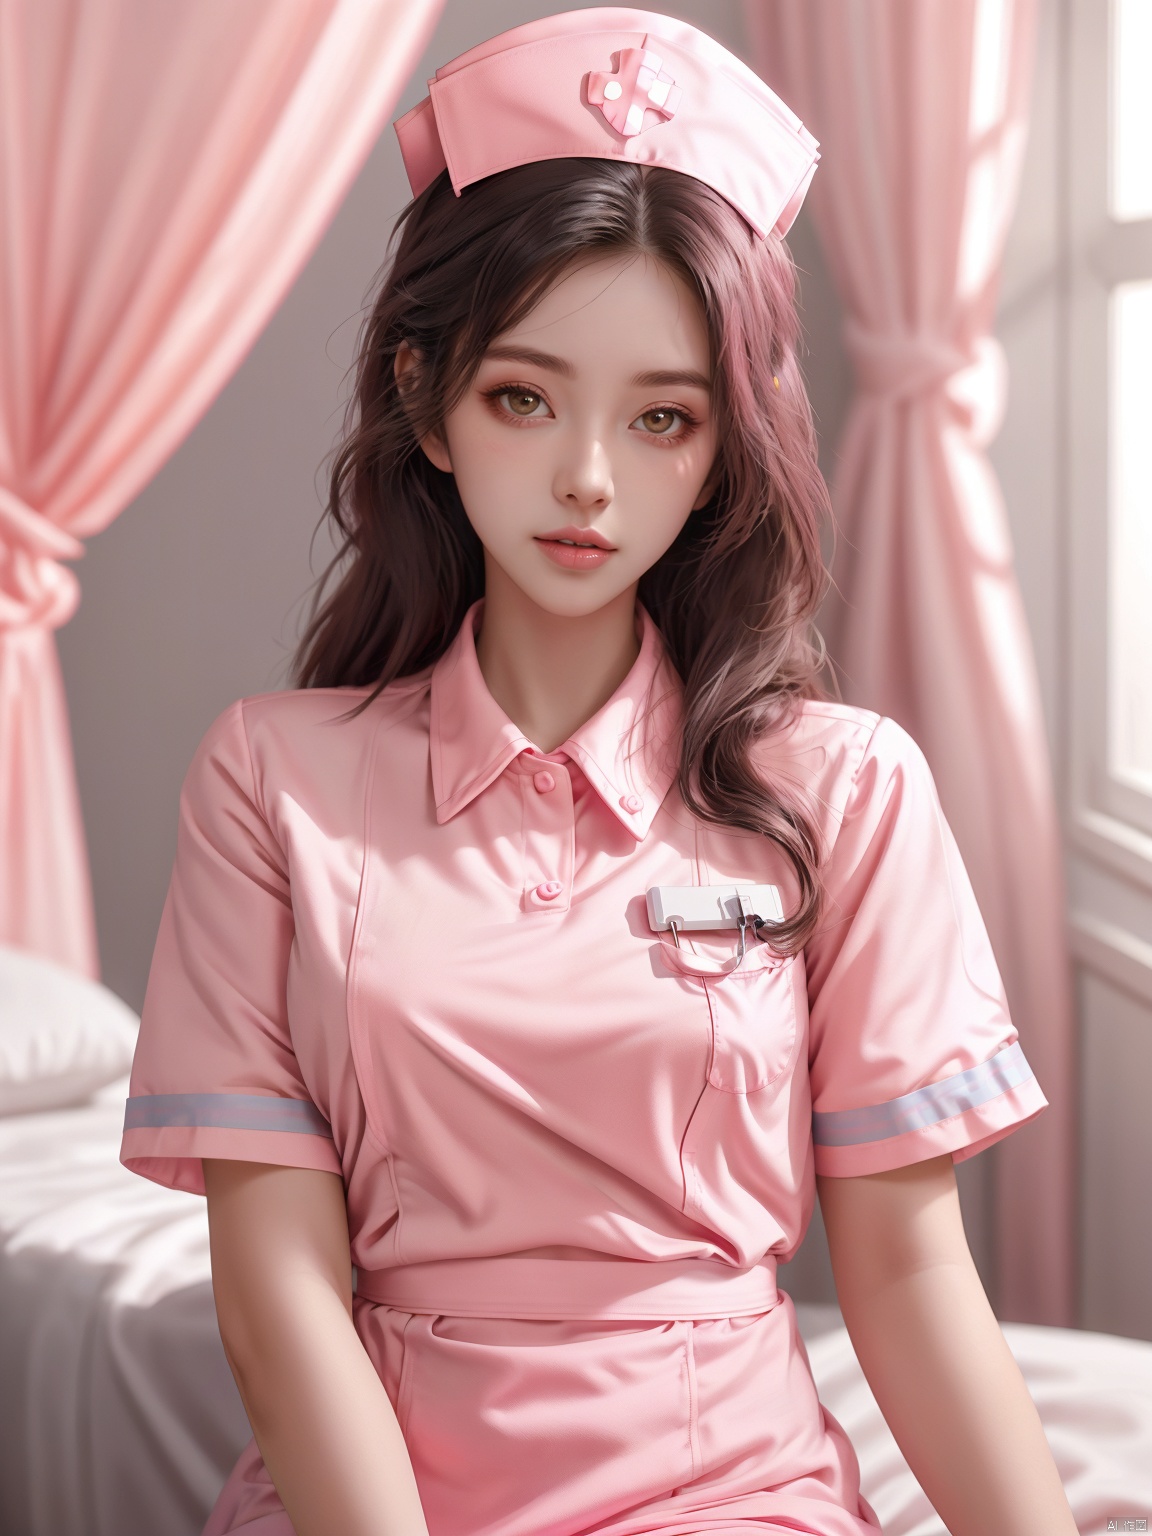  masterpiece, 1 girl, Lovely, Sweet, Long hair, nurse, looking at viewer, pink dress, Pink nurse's uniform, realistic, textured skin, super detail, best quality,